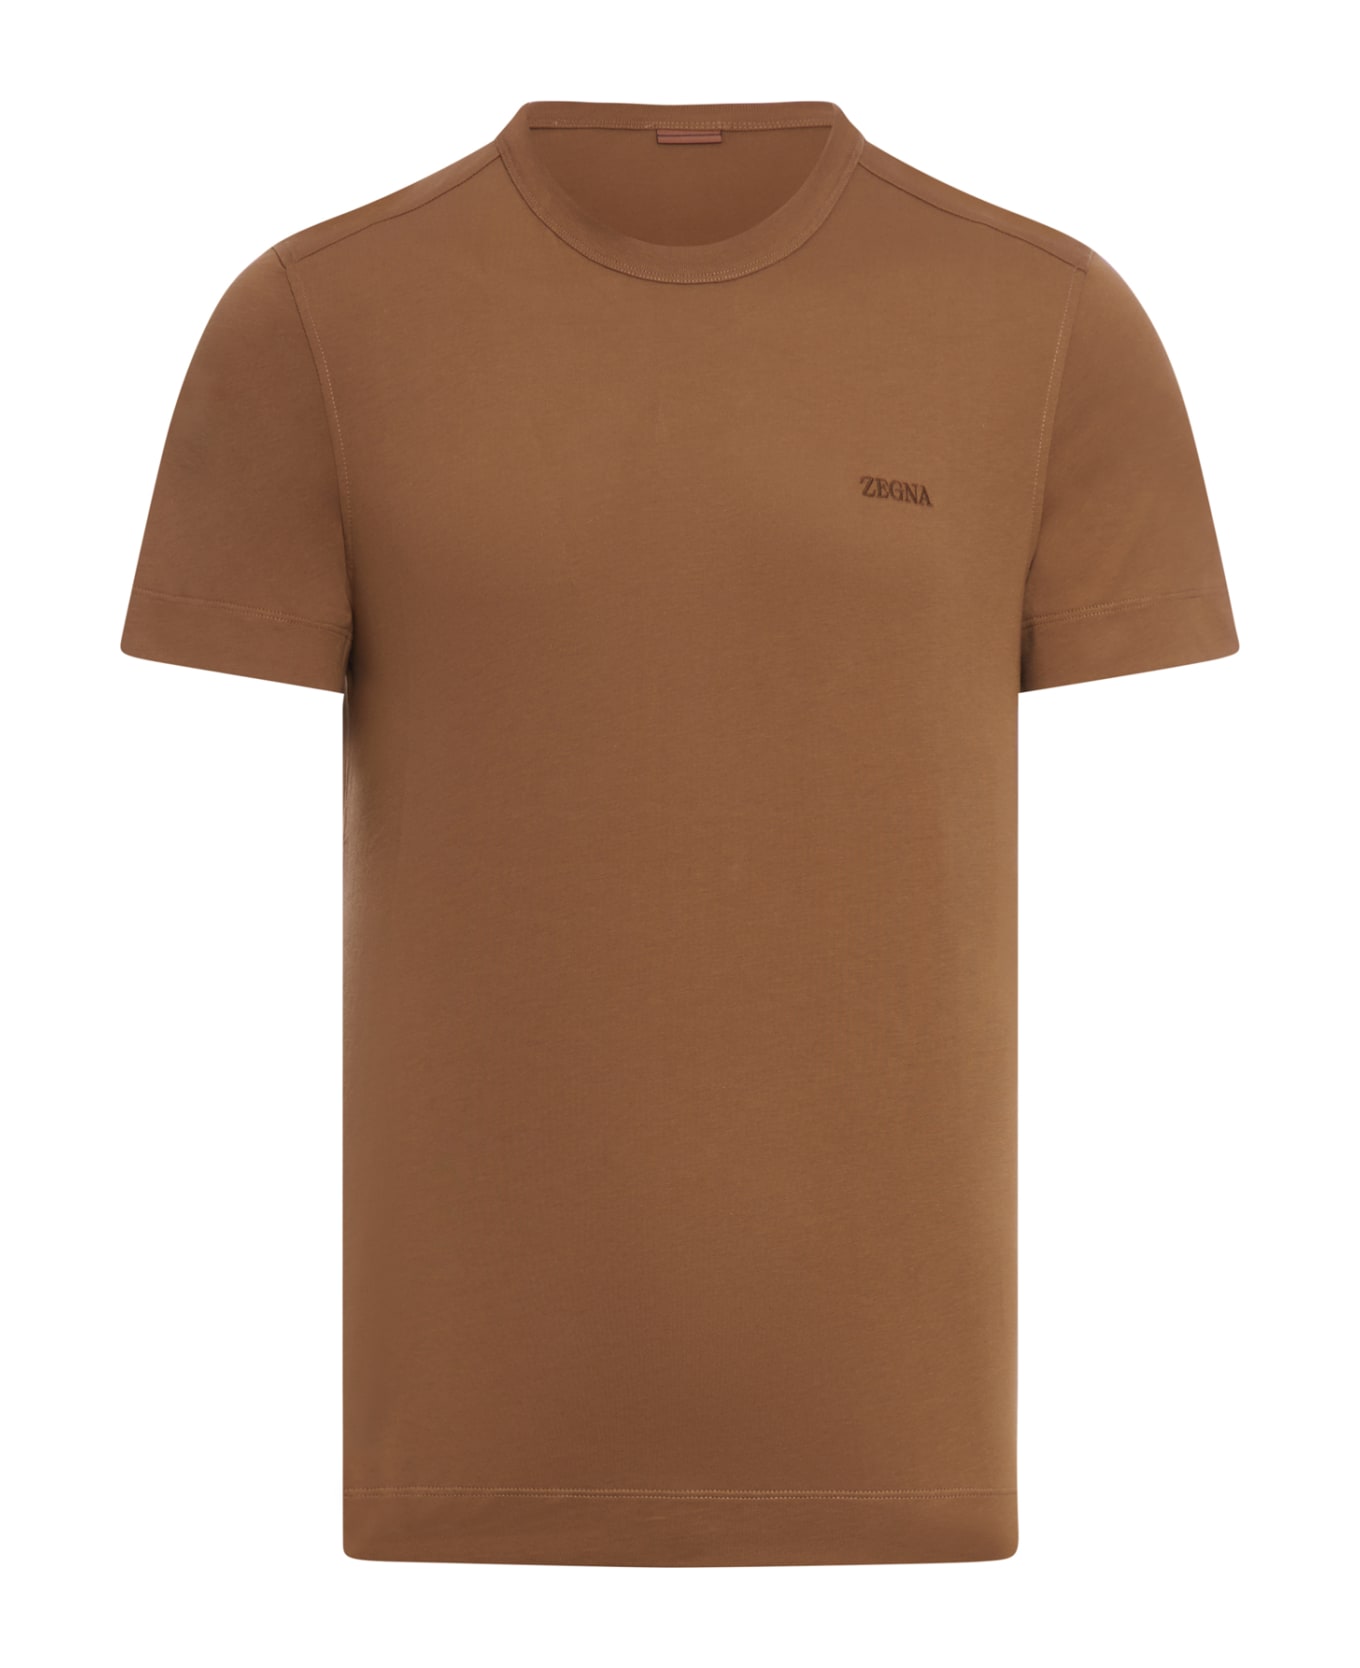 Zegna Tshirt - Medium Brown